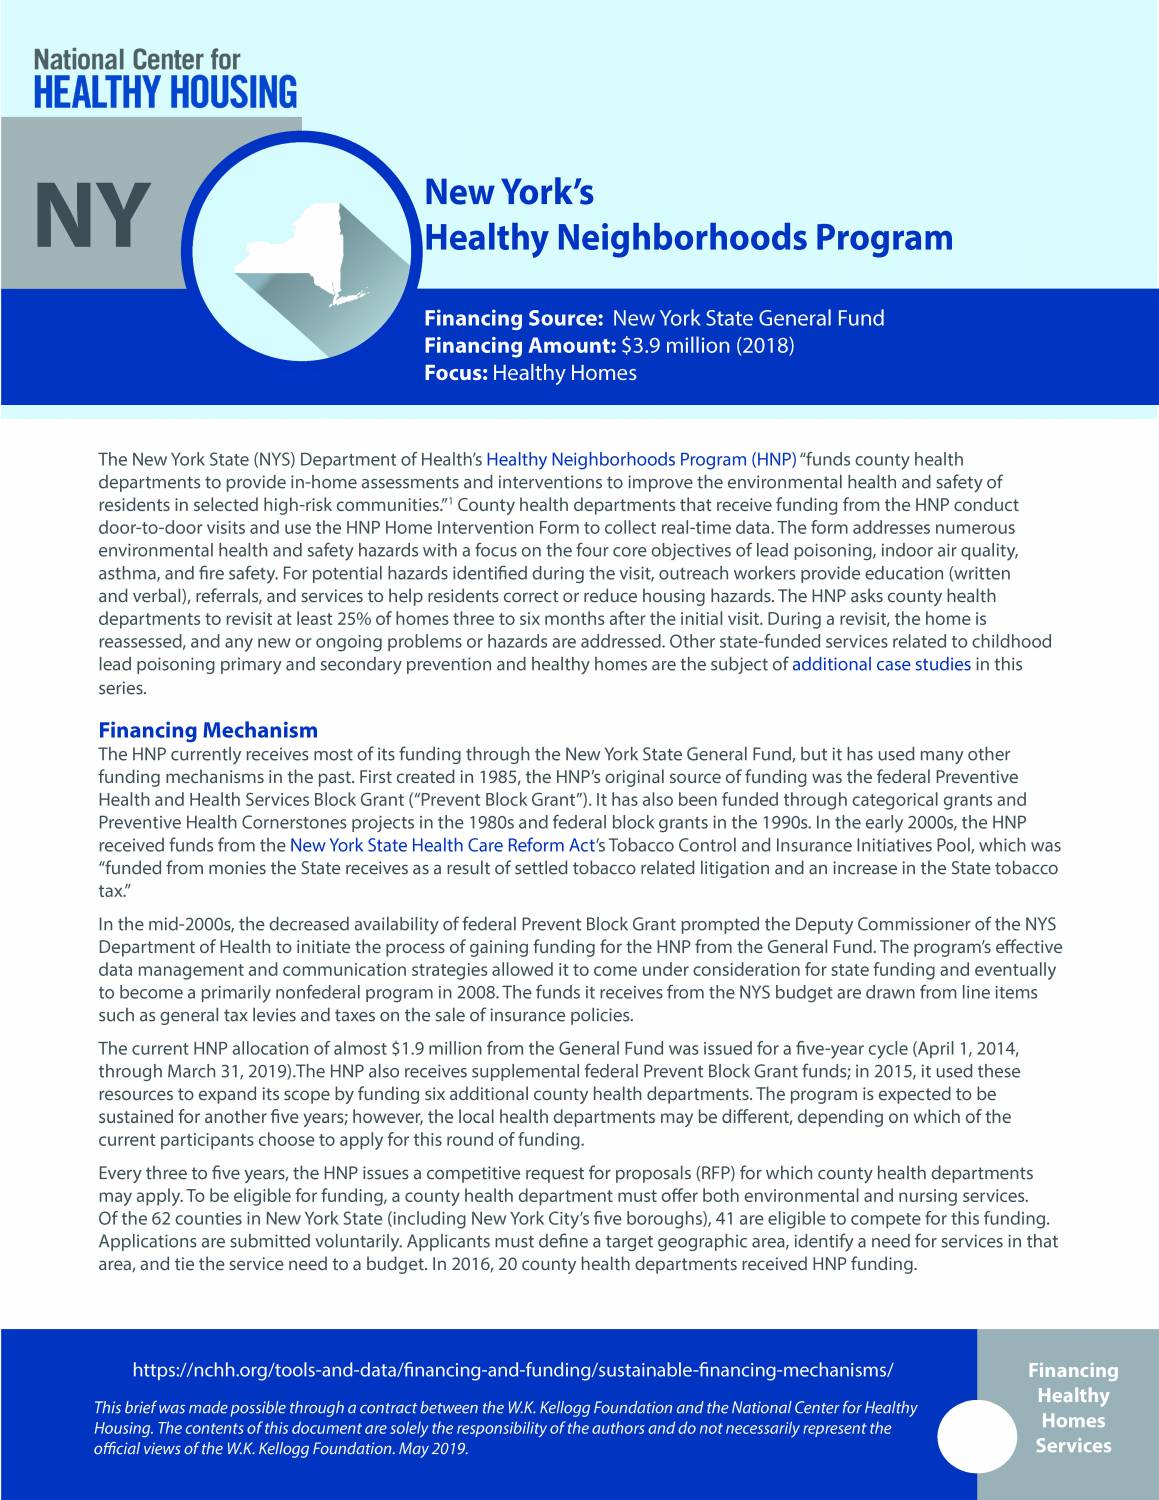 Sustainable Financing Mechanisms – New York's Healthy Neighborhoods Program 